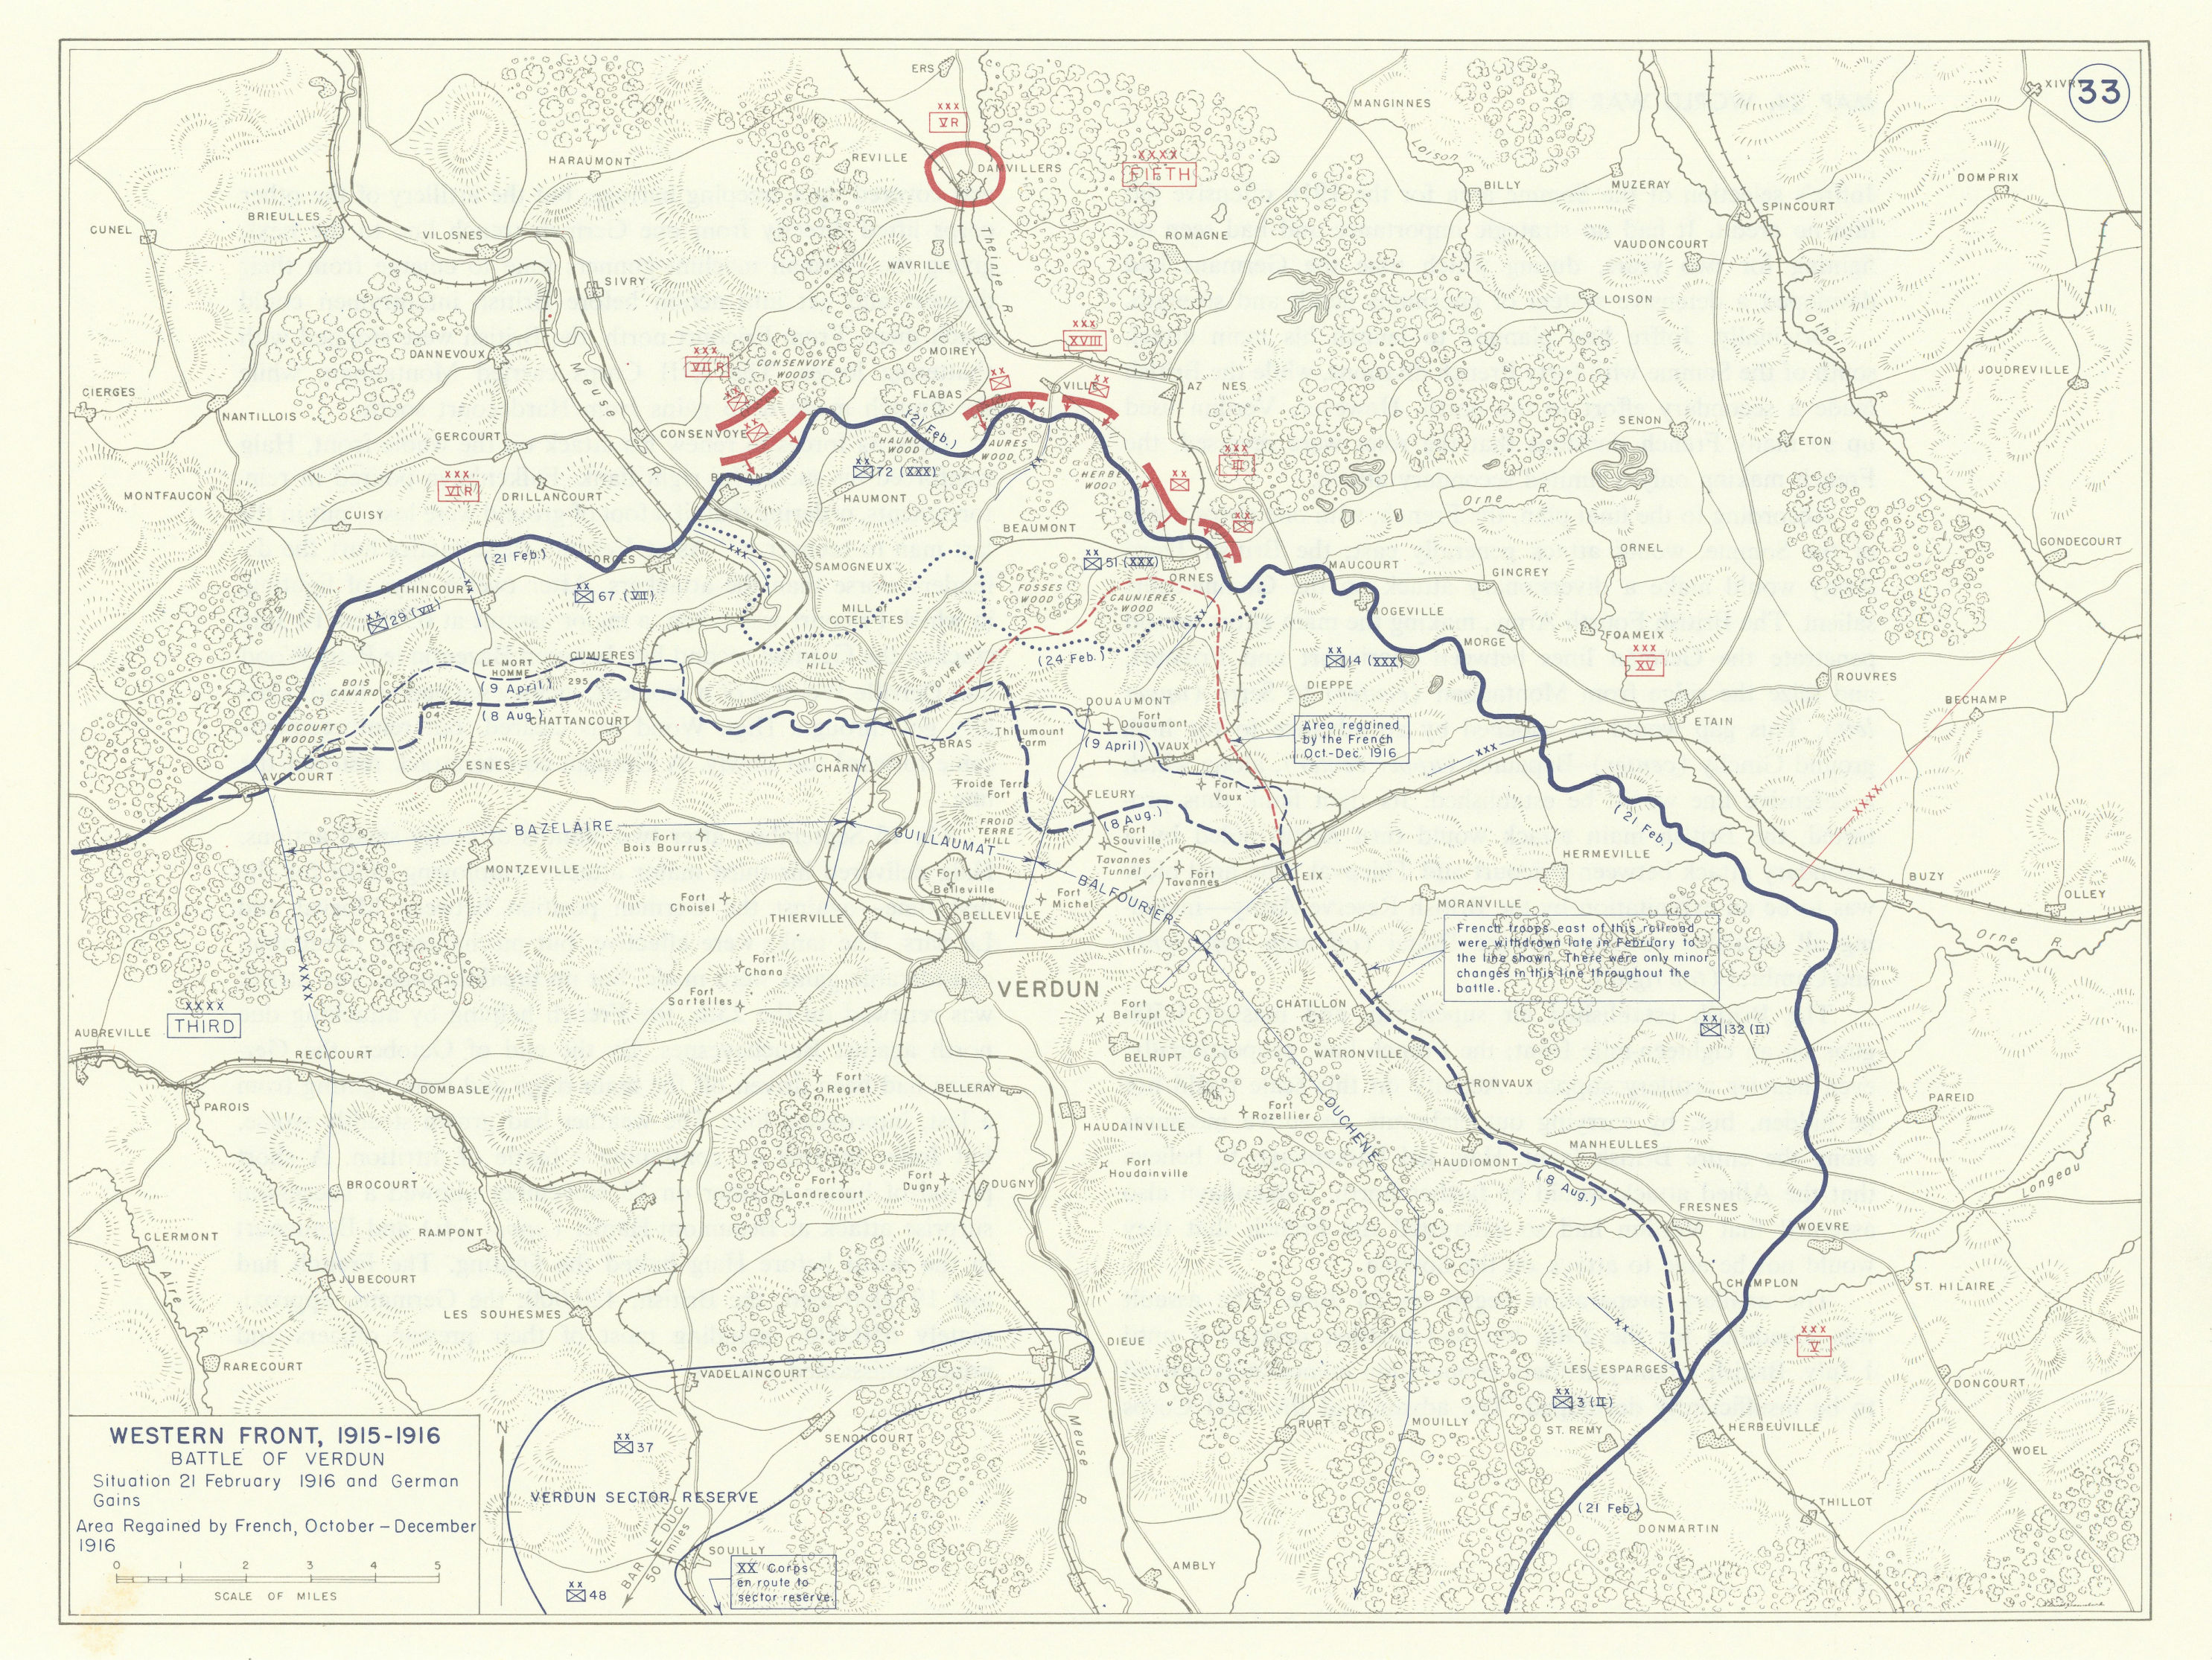 World War 1 Western Front 1915-1916 Battle of Verdun German/French gain 1959 map